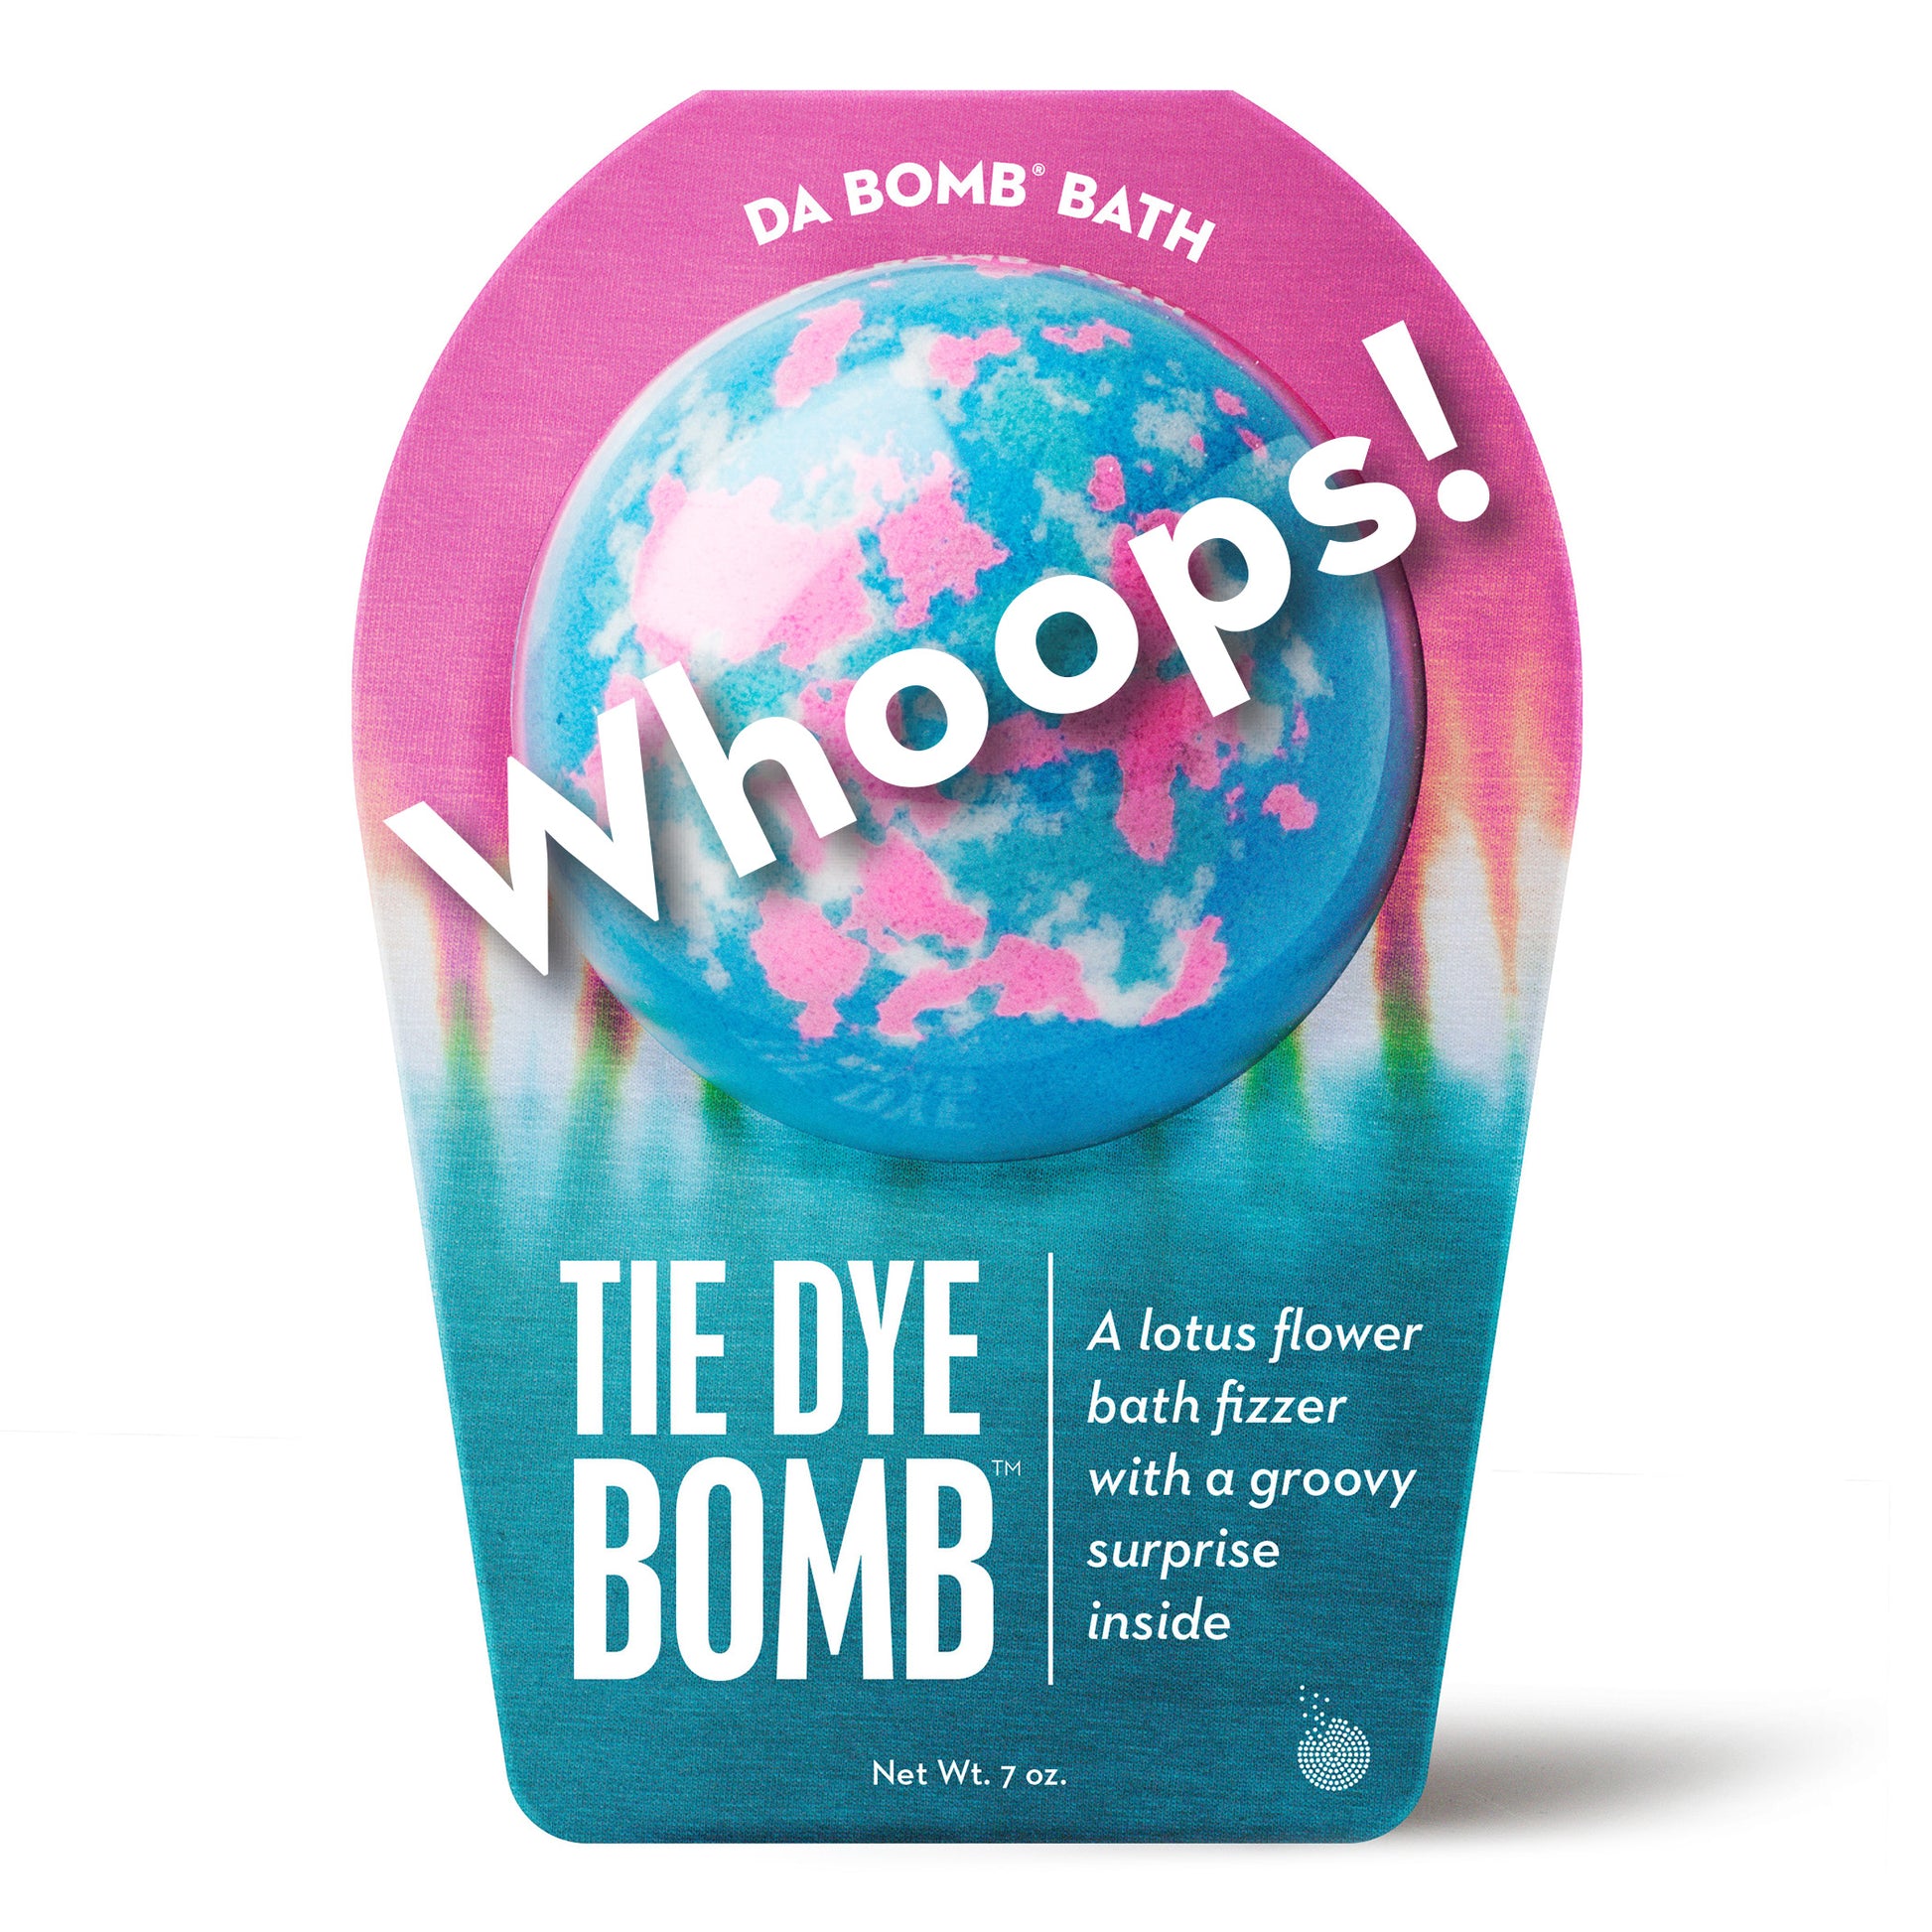 blue, pink and white tie dye bath bomb by da bomb bath fizzers